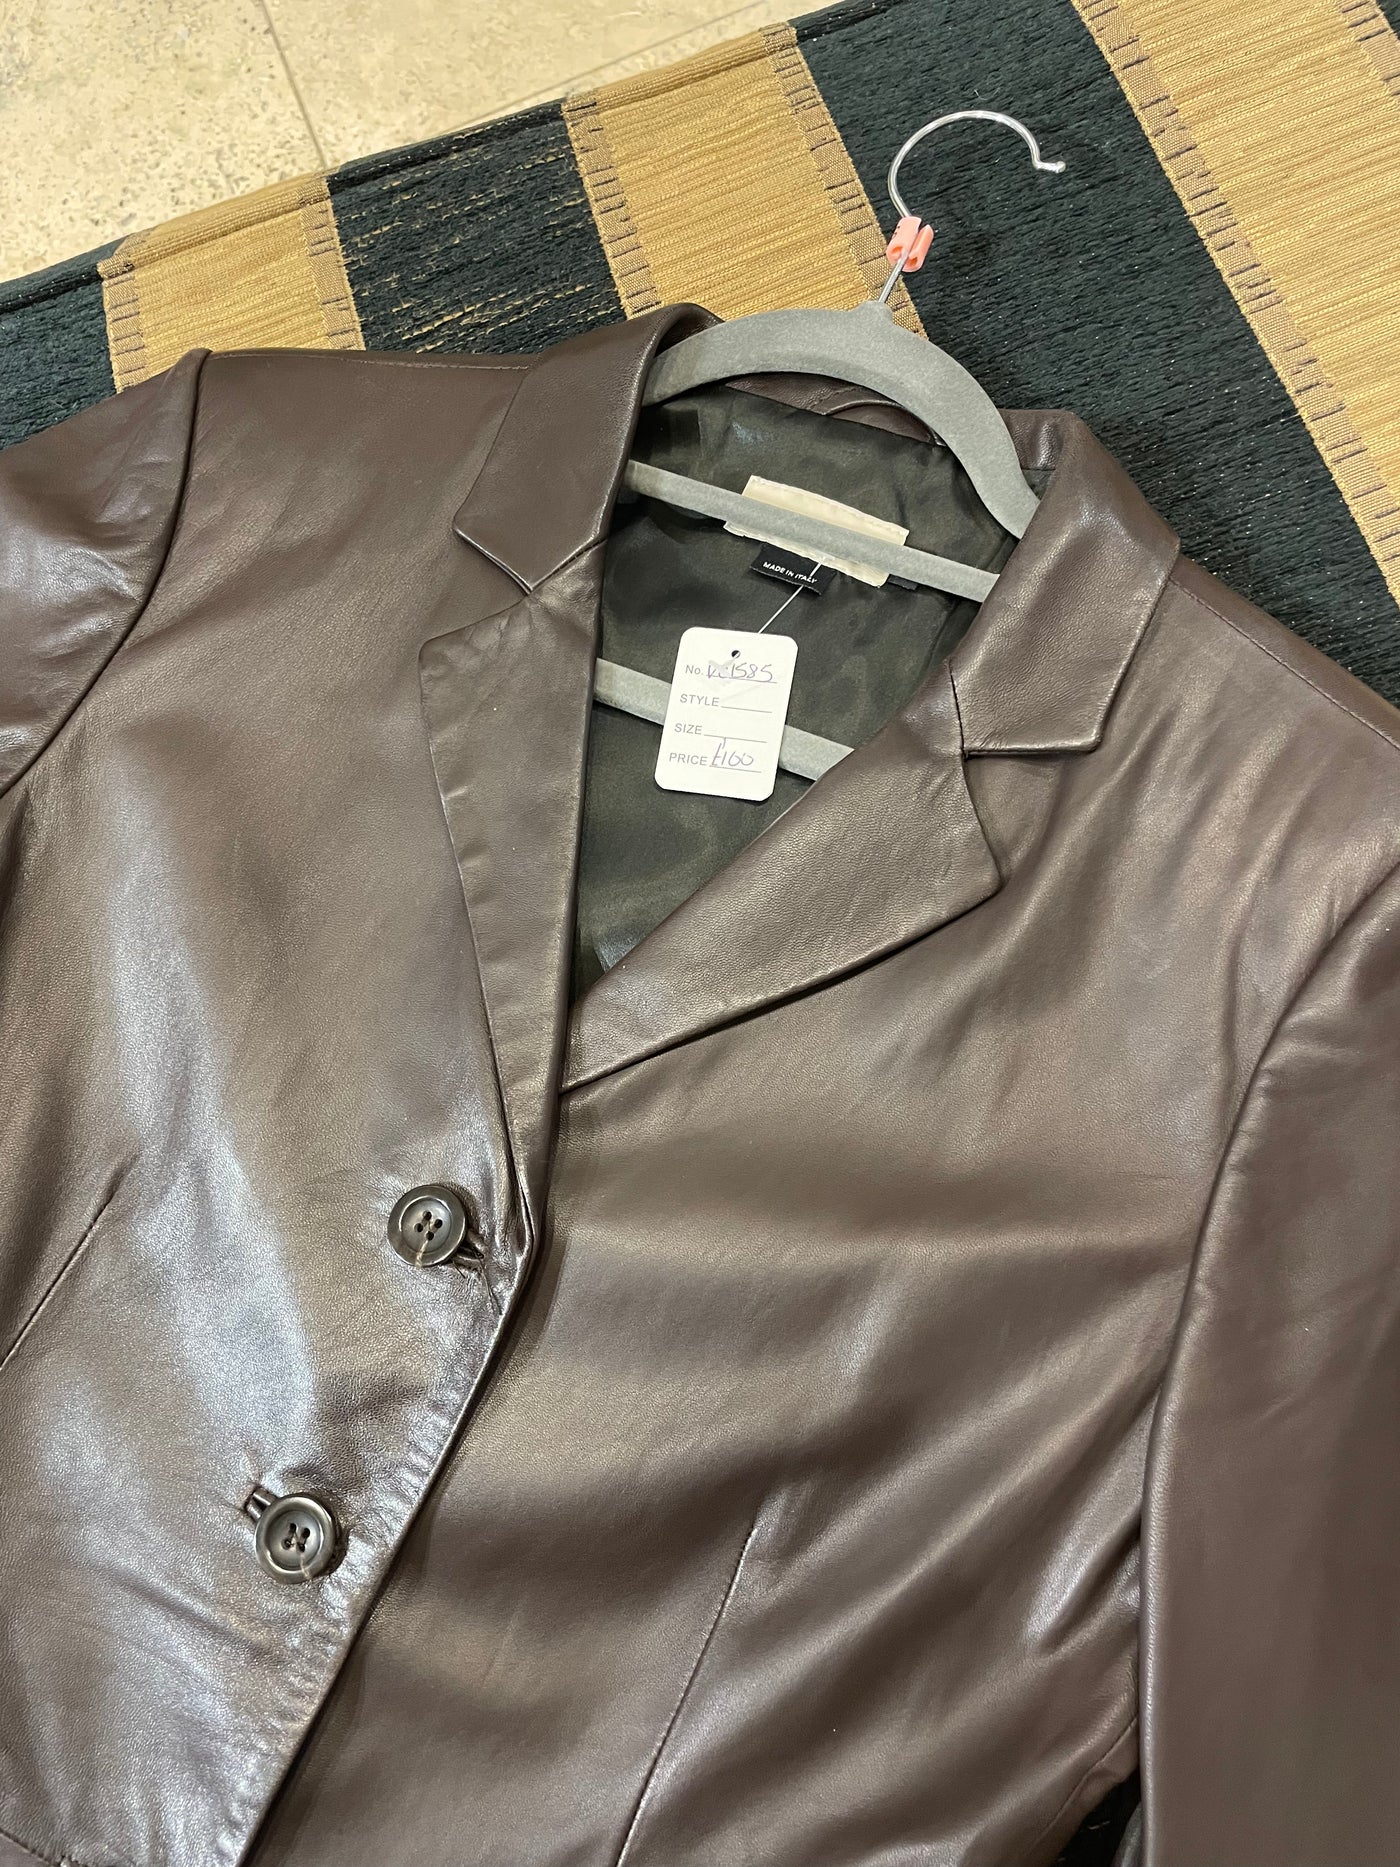 Emporio Armani vintage leather brown jacket size 44